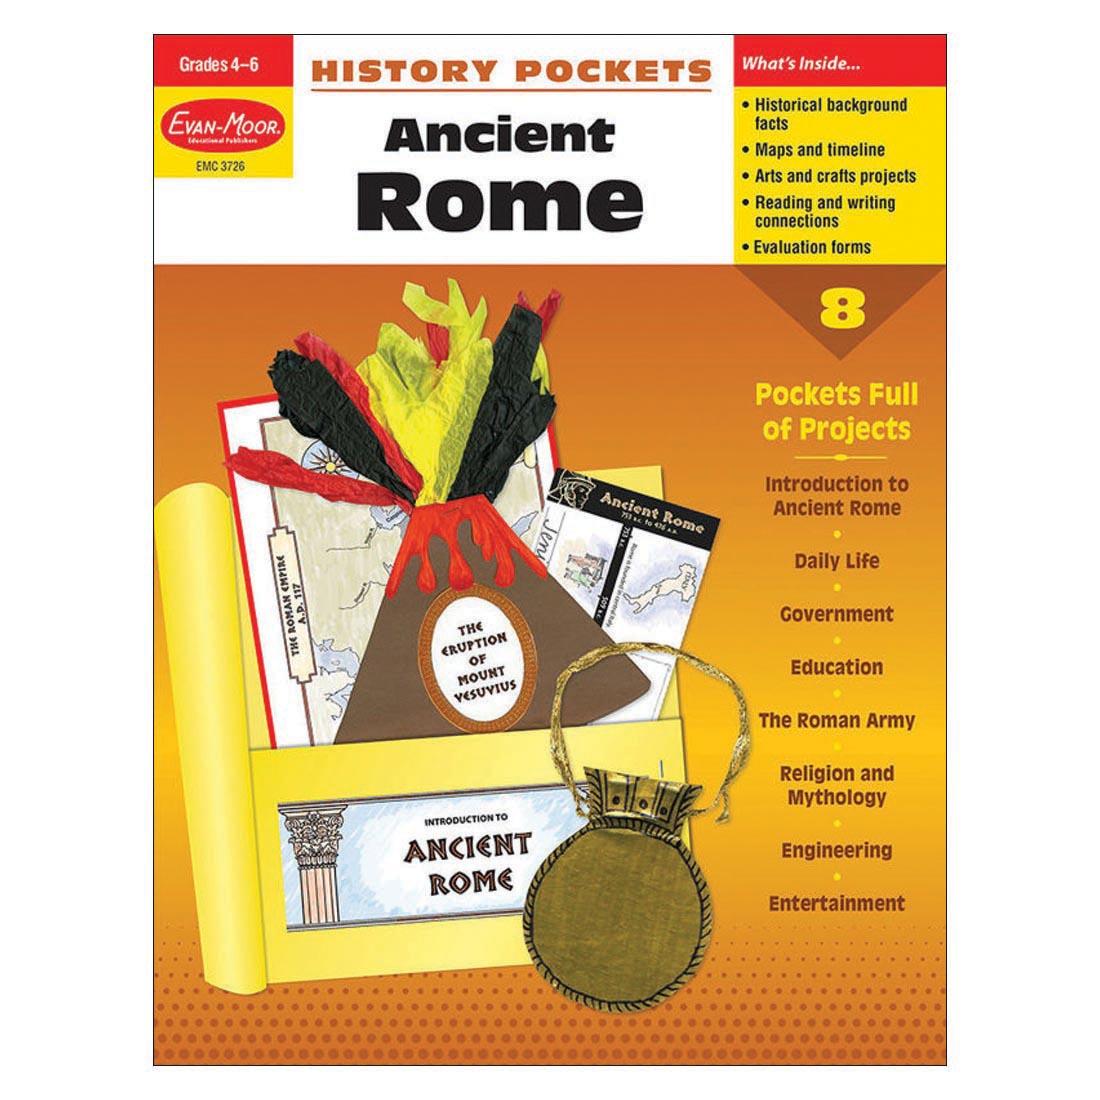 History Pockets Ancient Rome by Evan-Moor